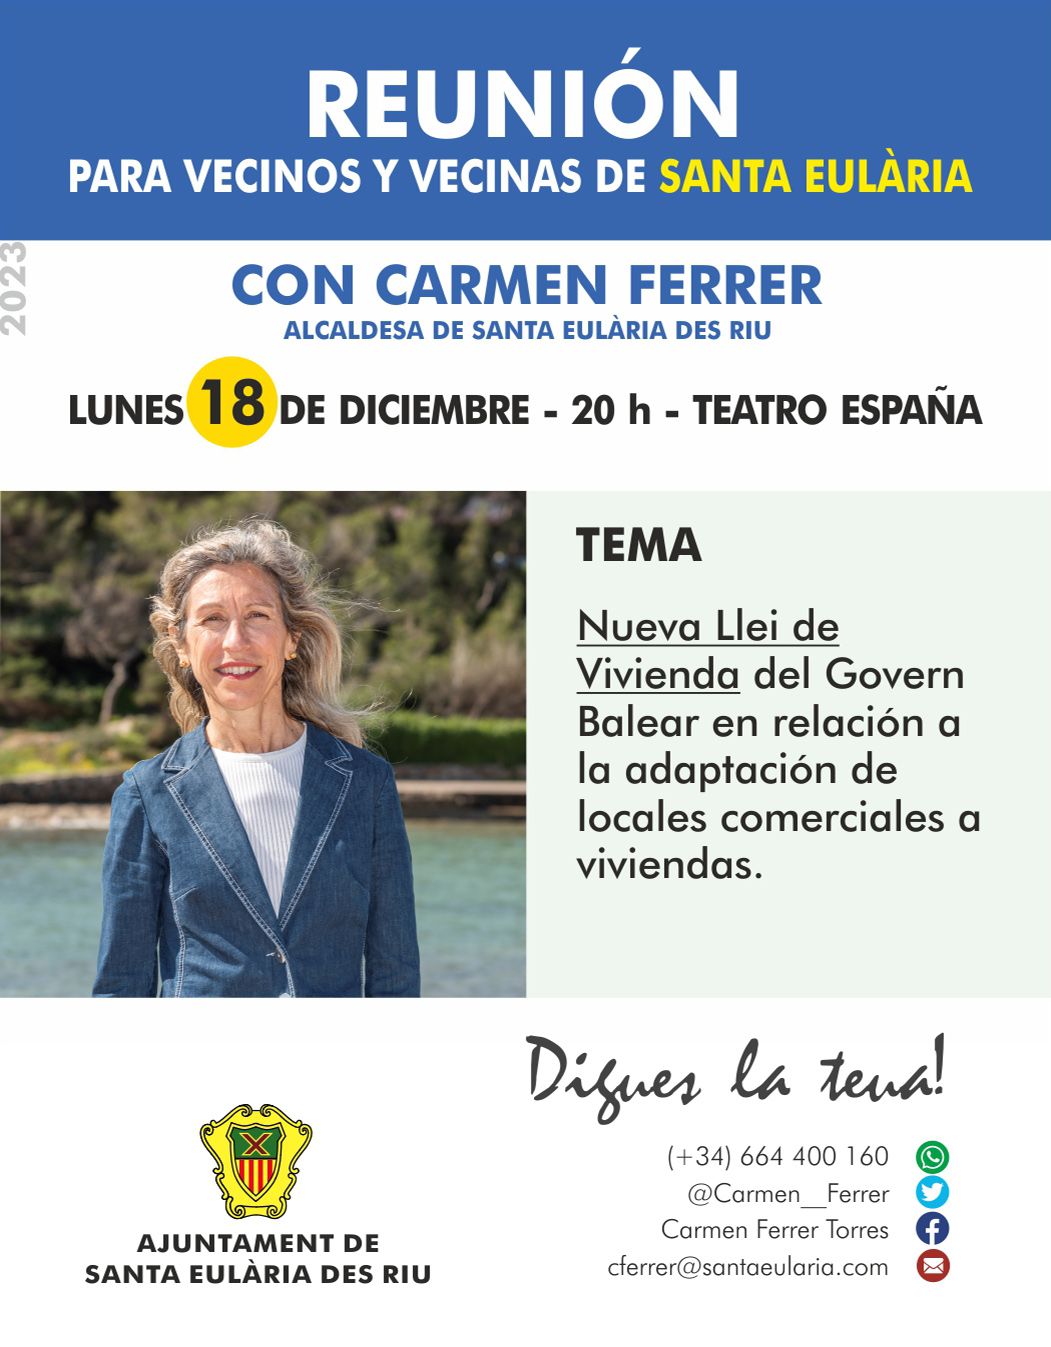 Digues la Teua en Santa Eulària el 18 de diciembre para explicar la posibilidad de reconvertir los locales comerciales a vivienda